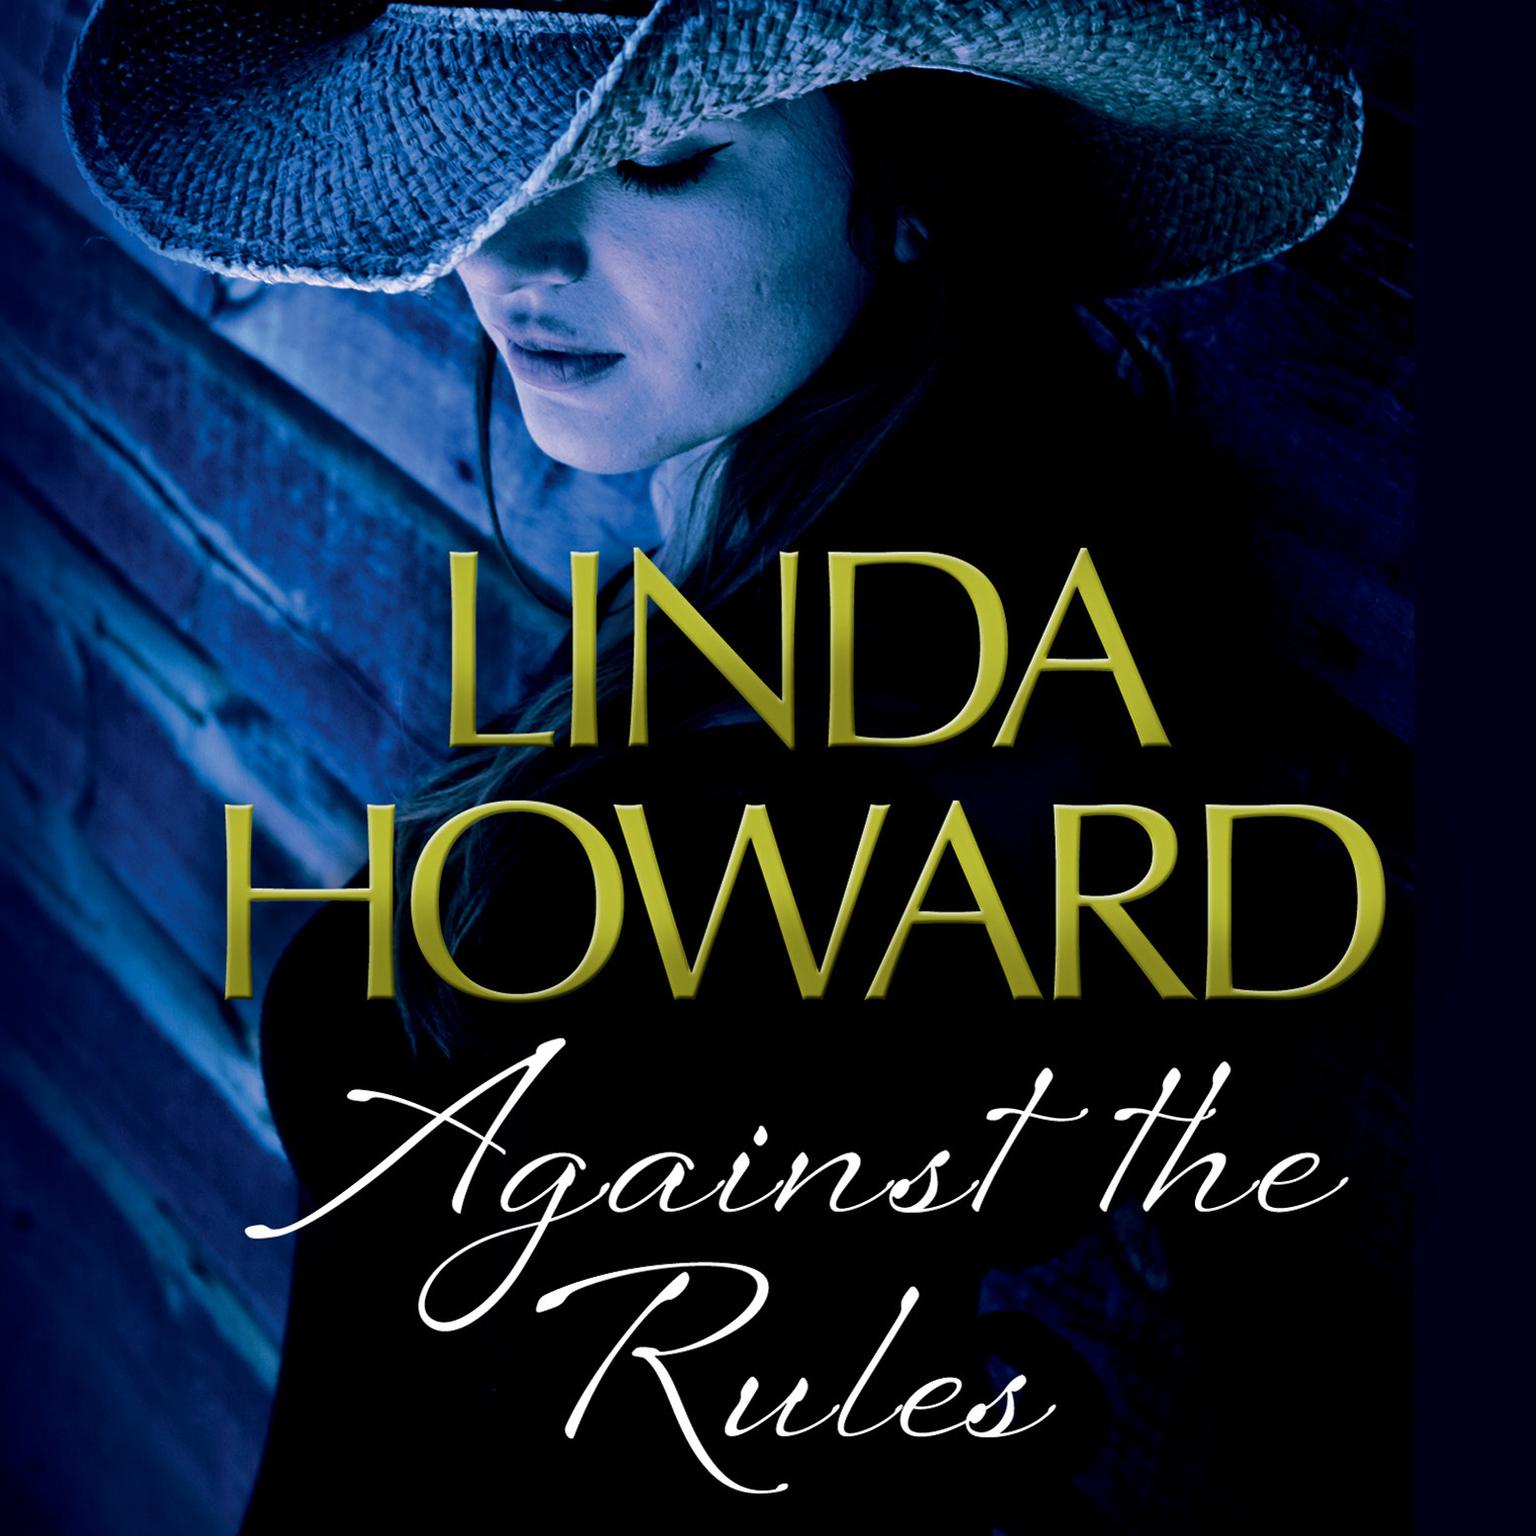 Against the Rules Audiobook, by Linda Howard